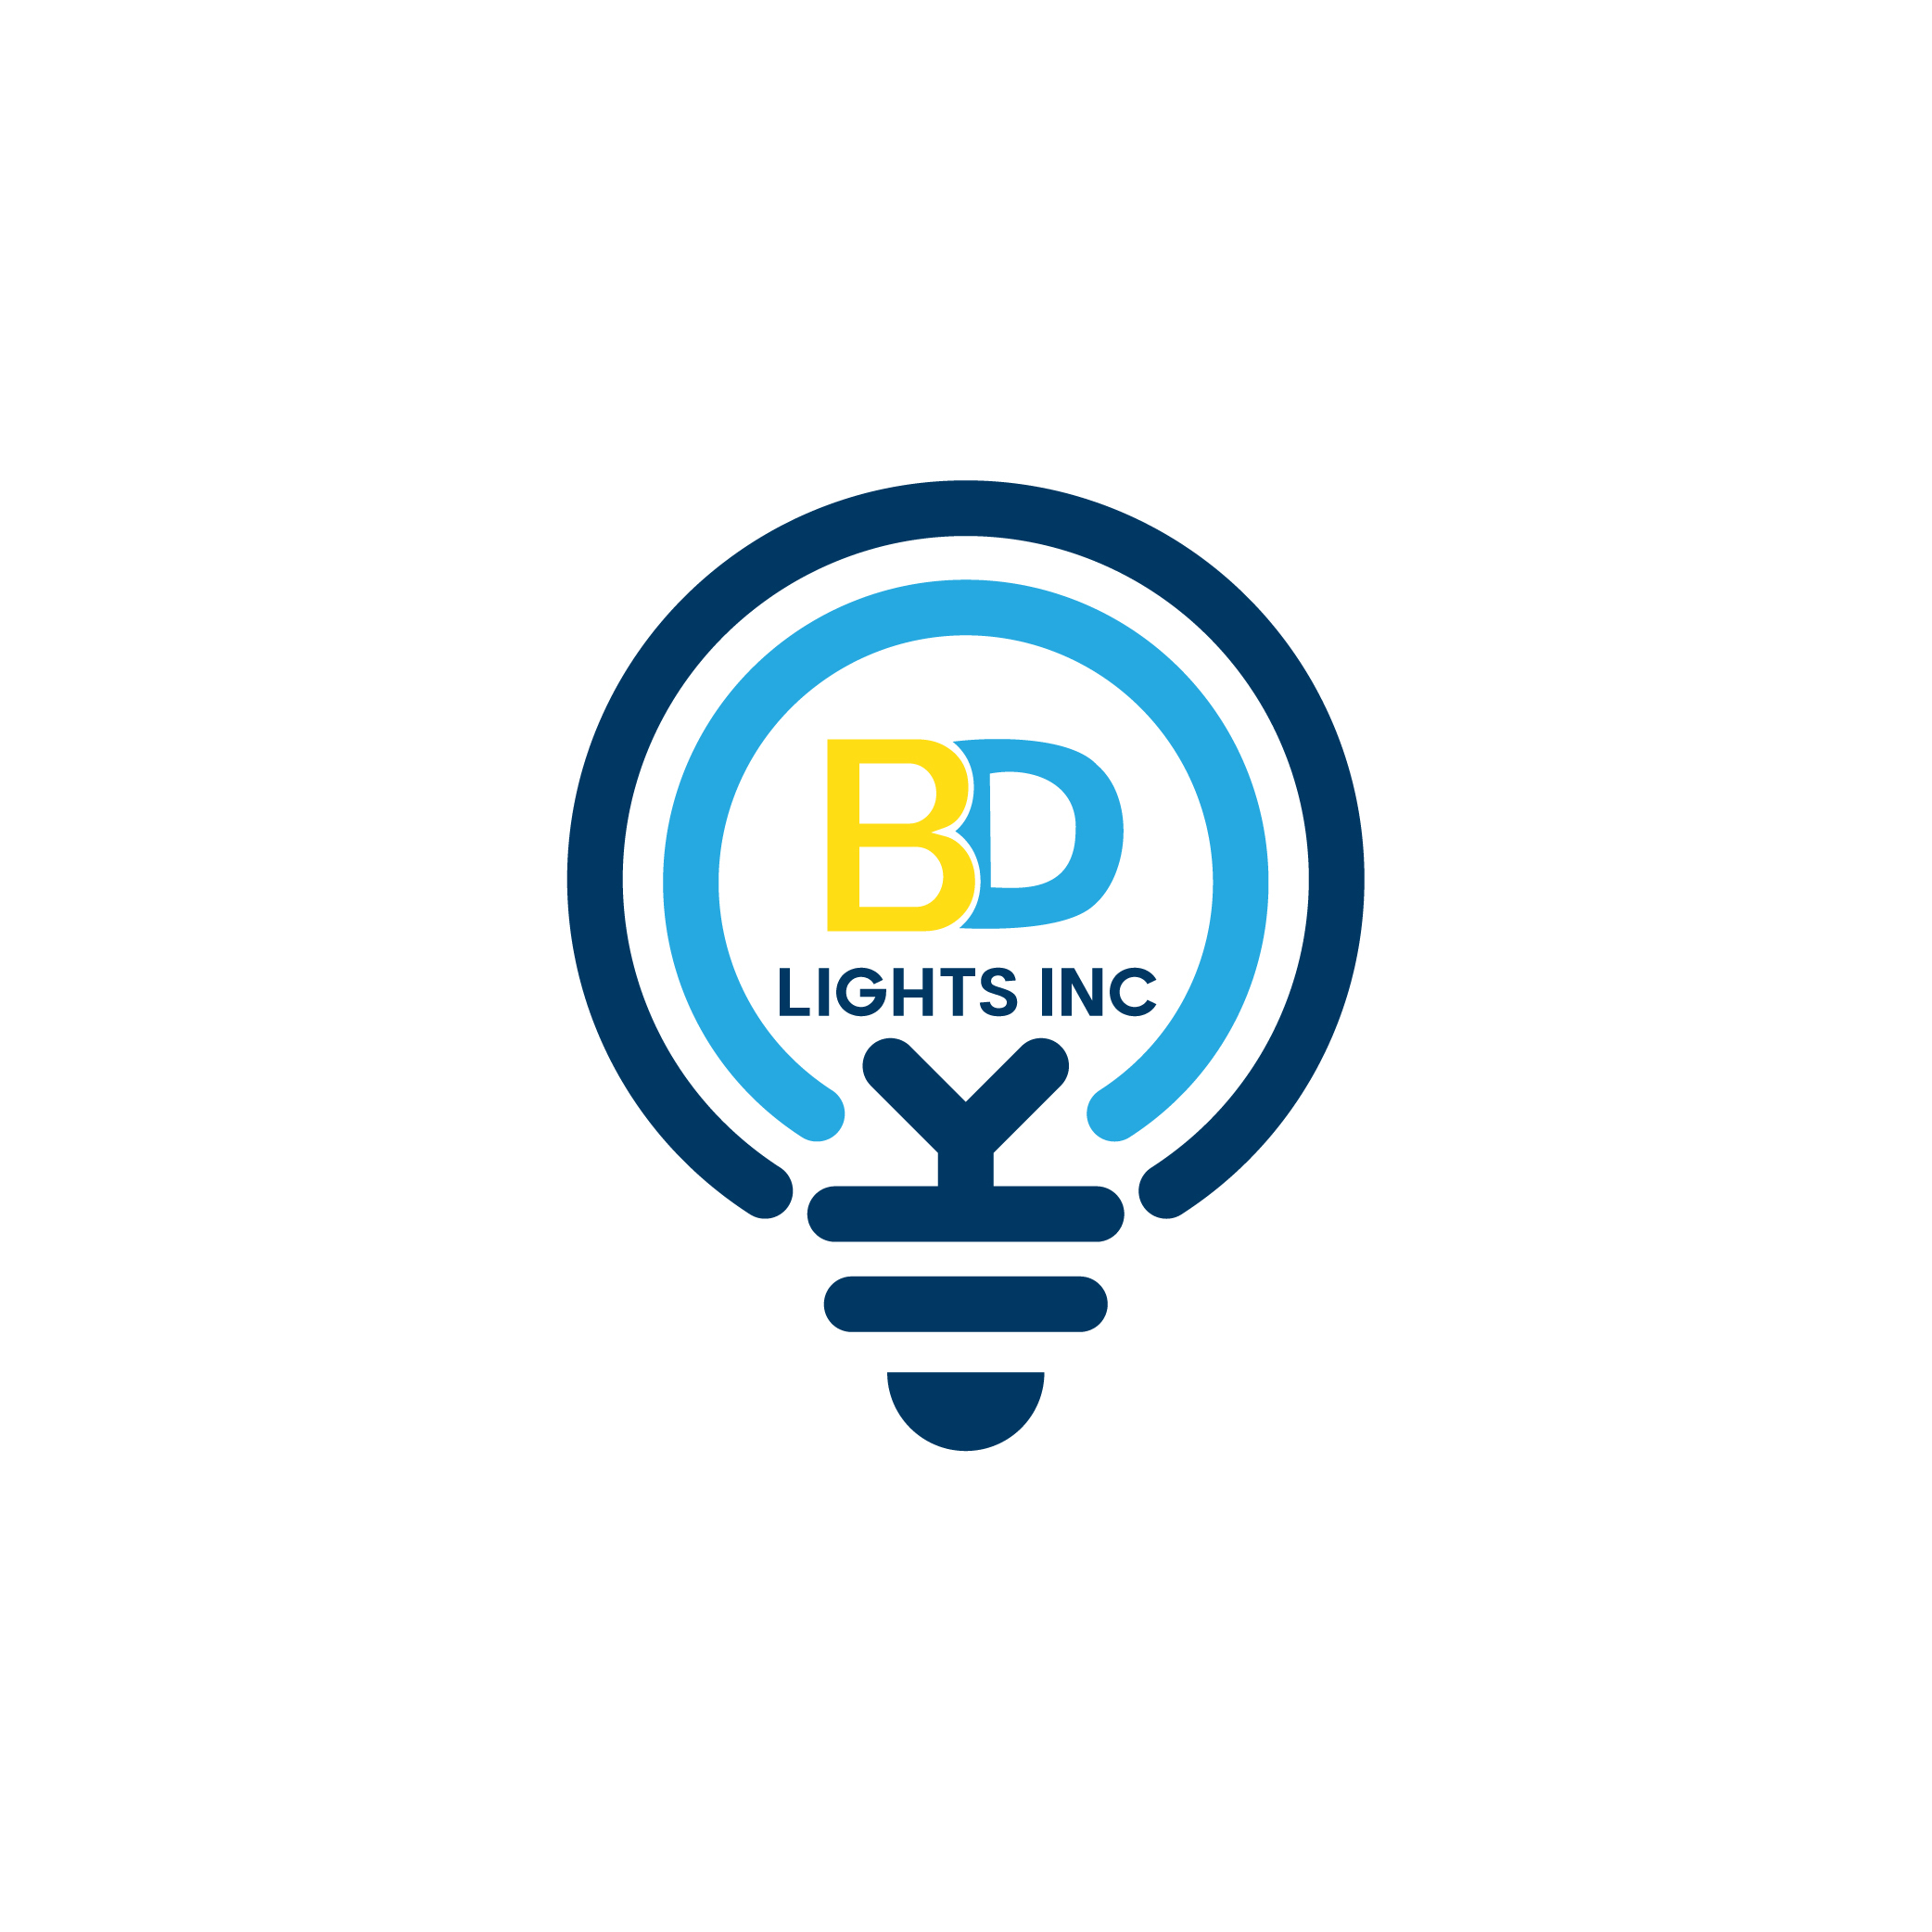 BD Lights Inc's logo